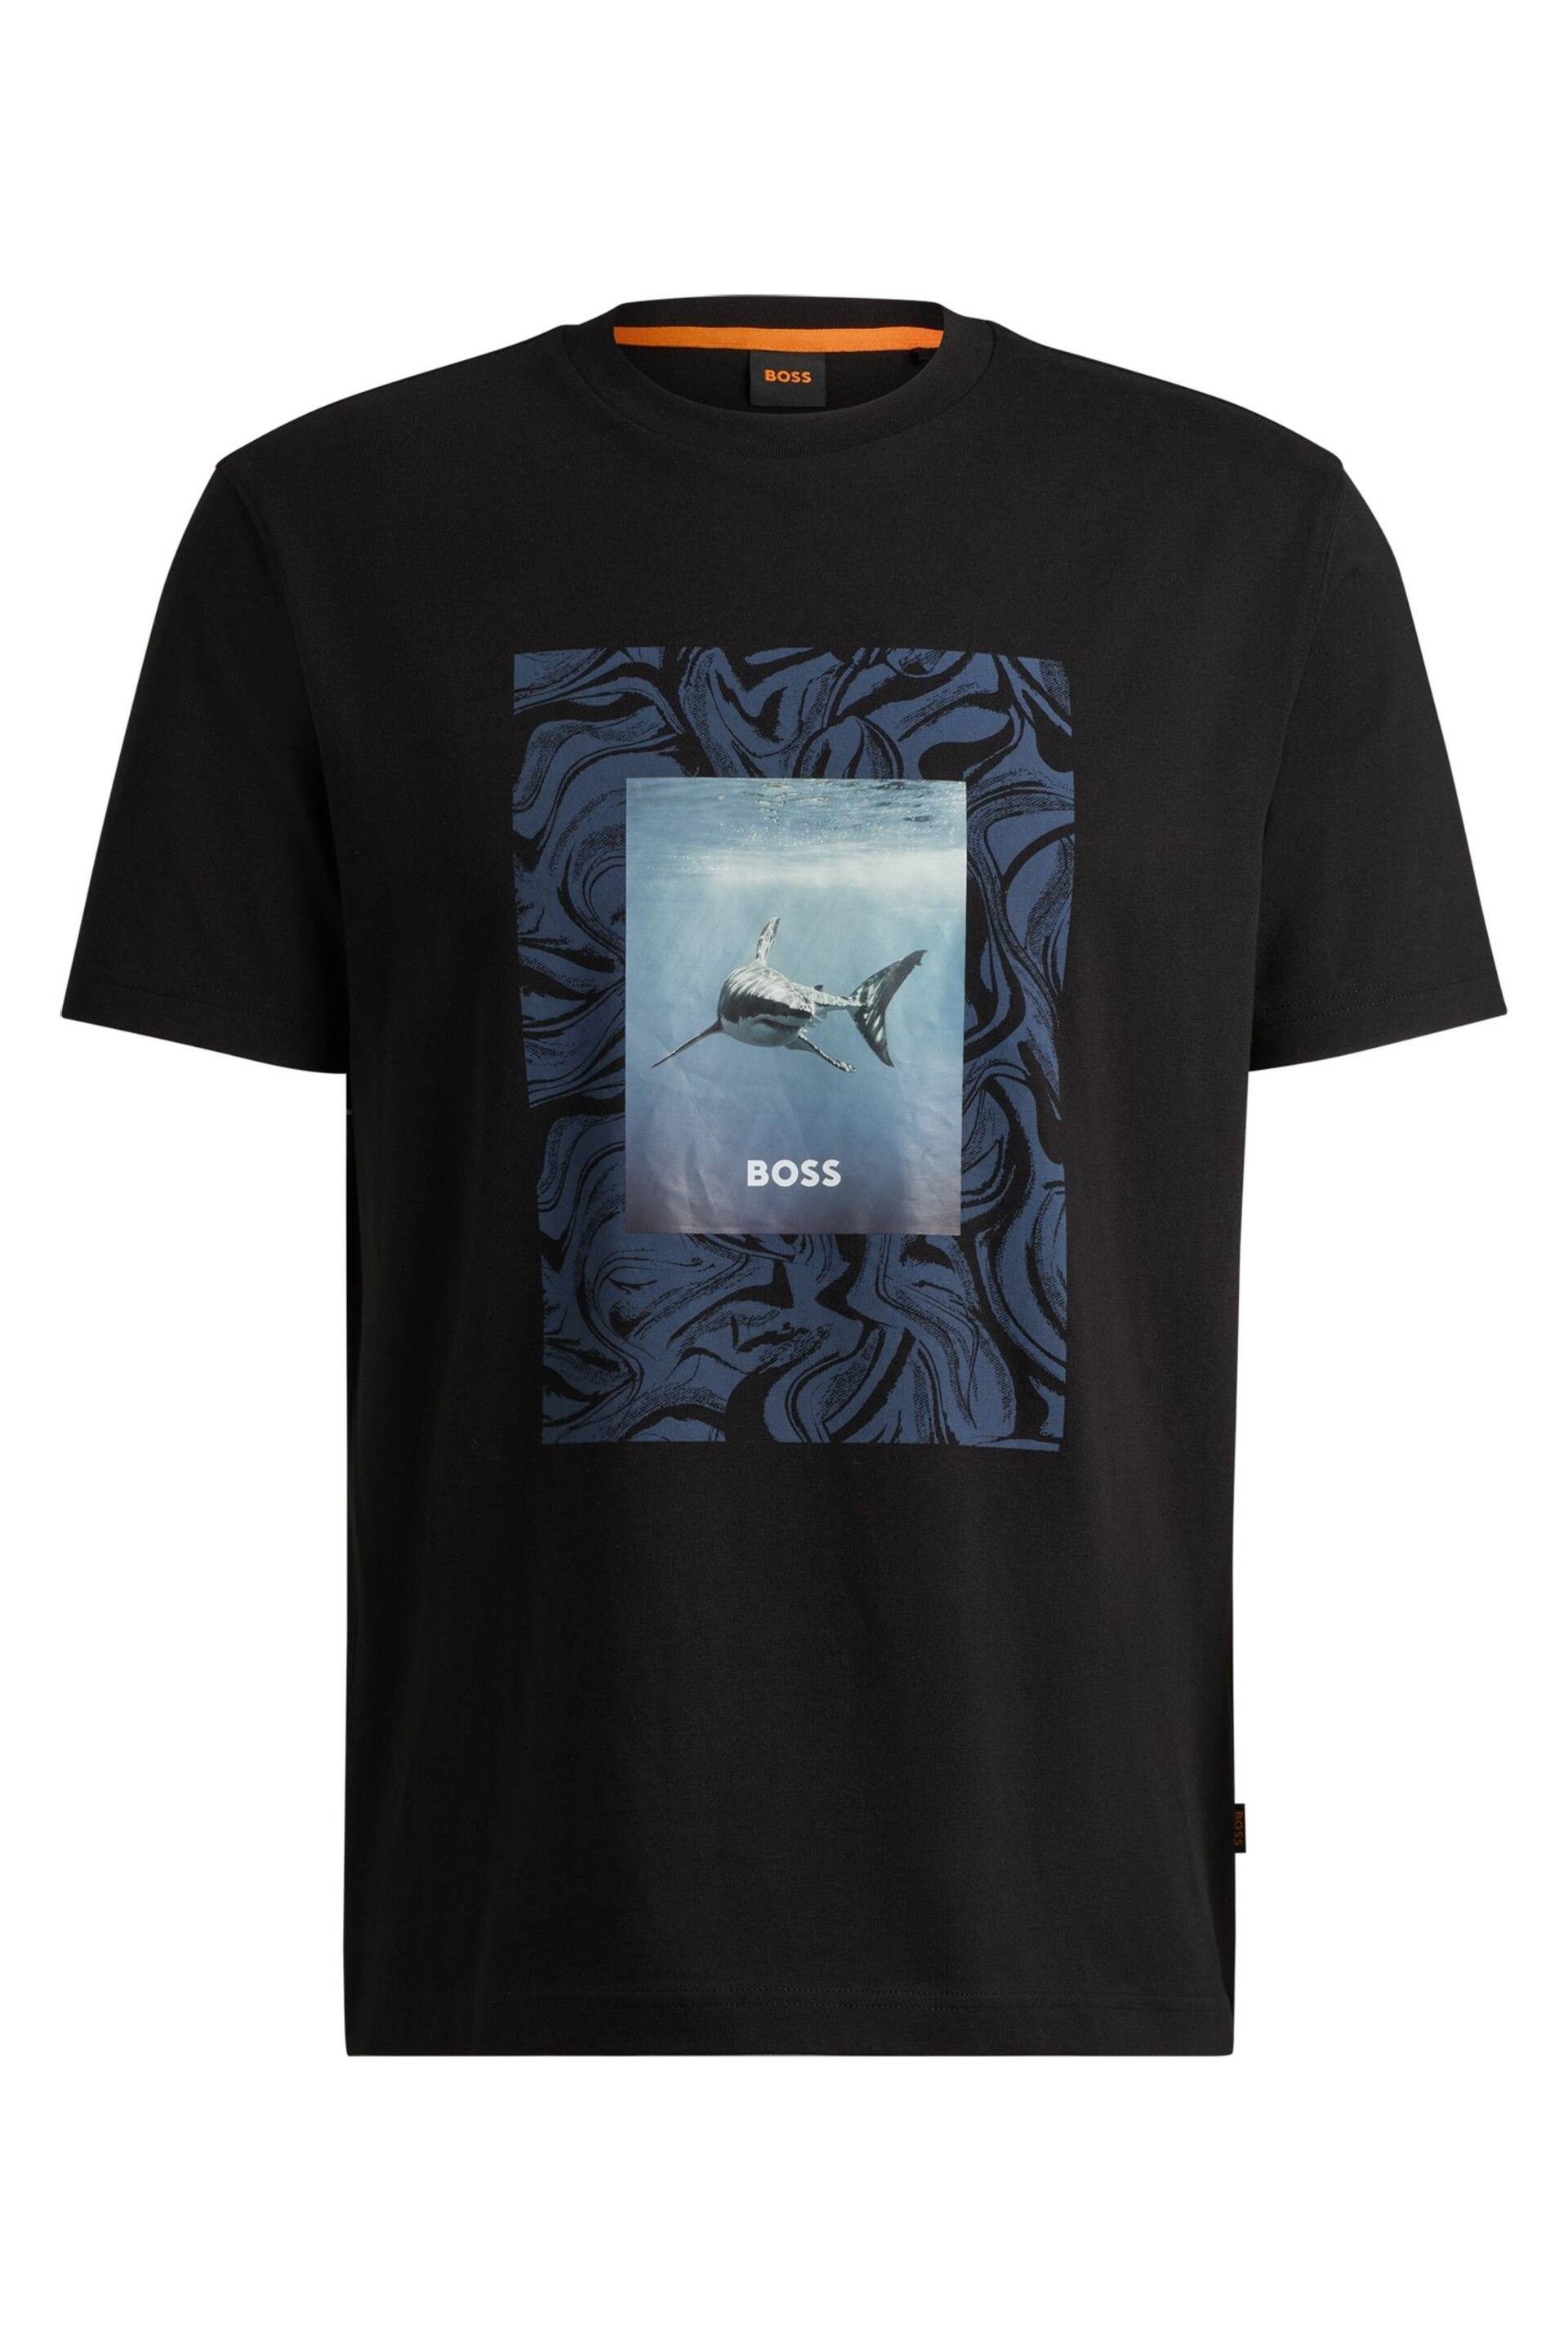 BOSS Black Cotton-Jersey Regular-Fit T-Shirt With Seasonal Artwork - Image 5 of 5